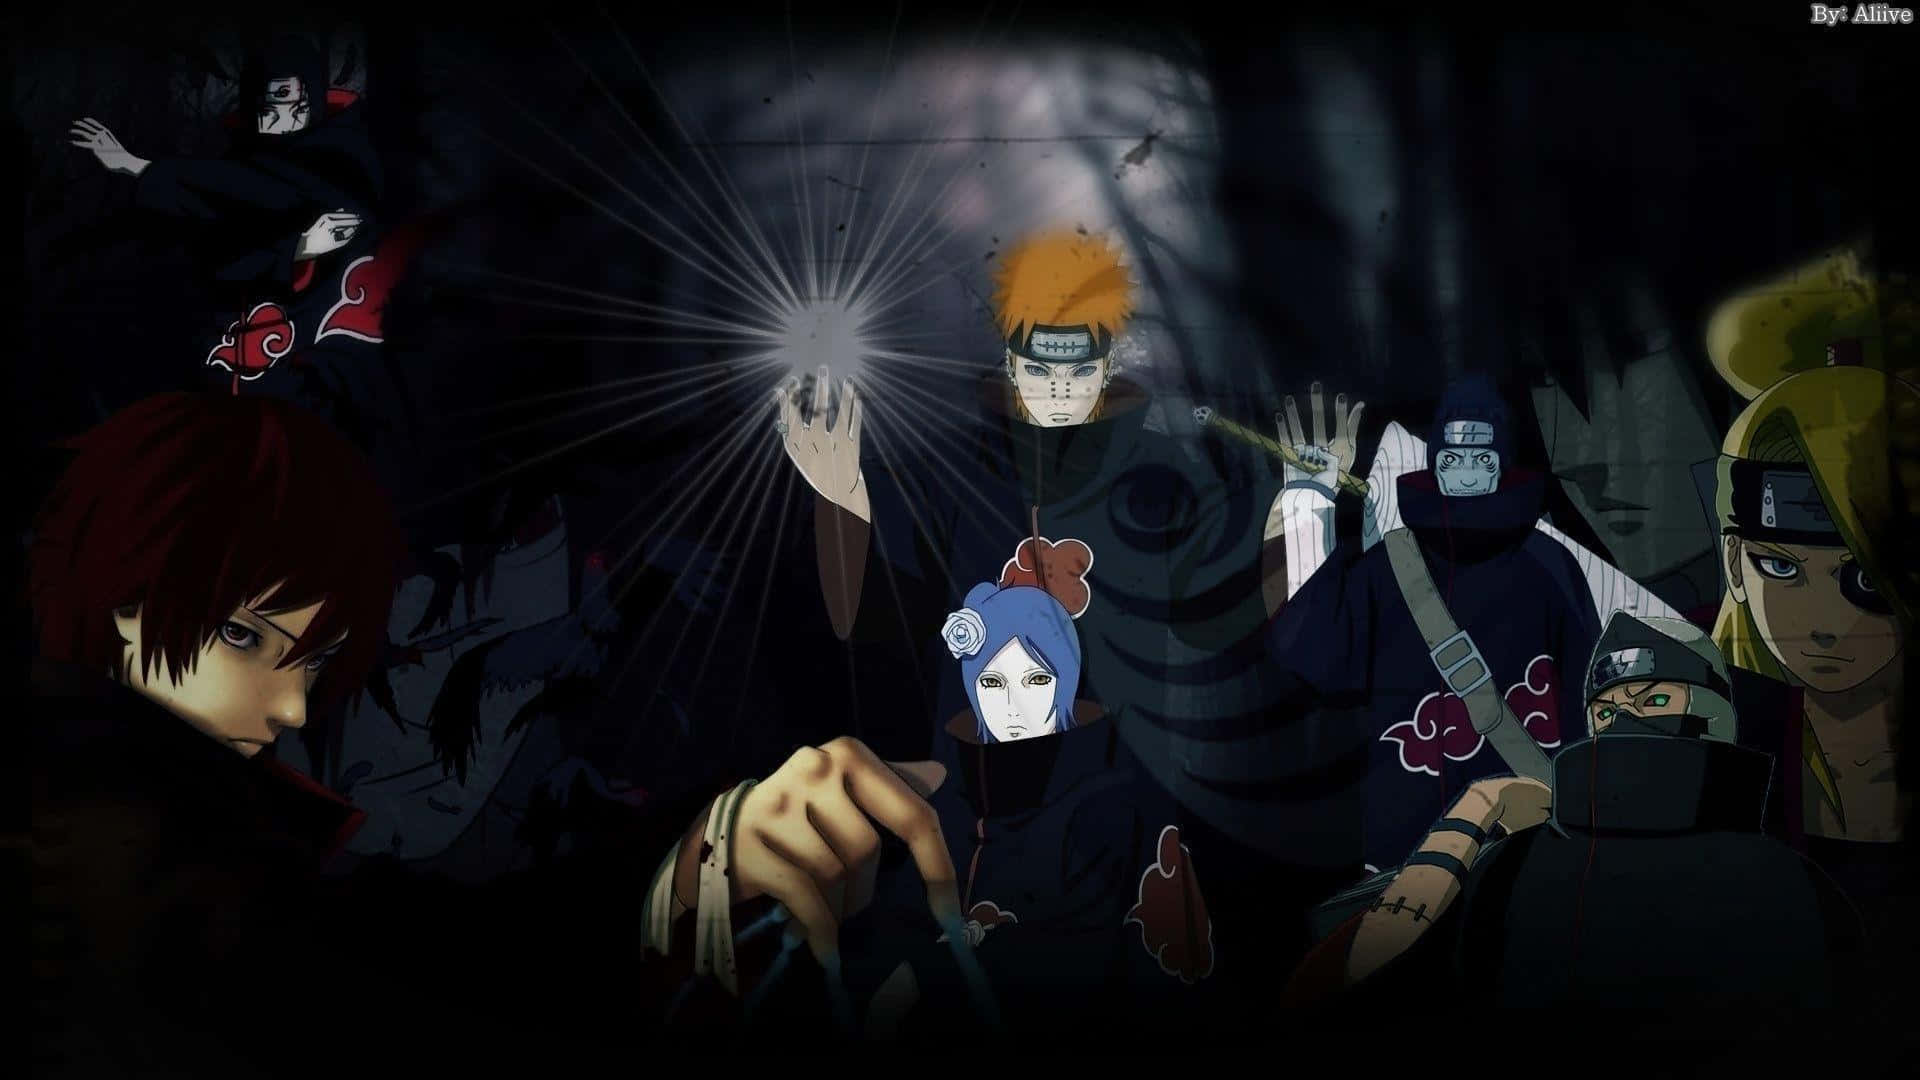 Genialfondo De Pantalla De Naruto De Los Villanos Ninjas De Akatsuki Para Tu Escritorio. Fondo de pantalla